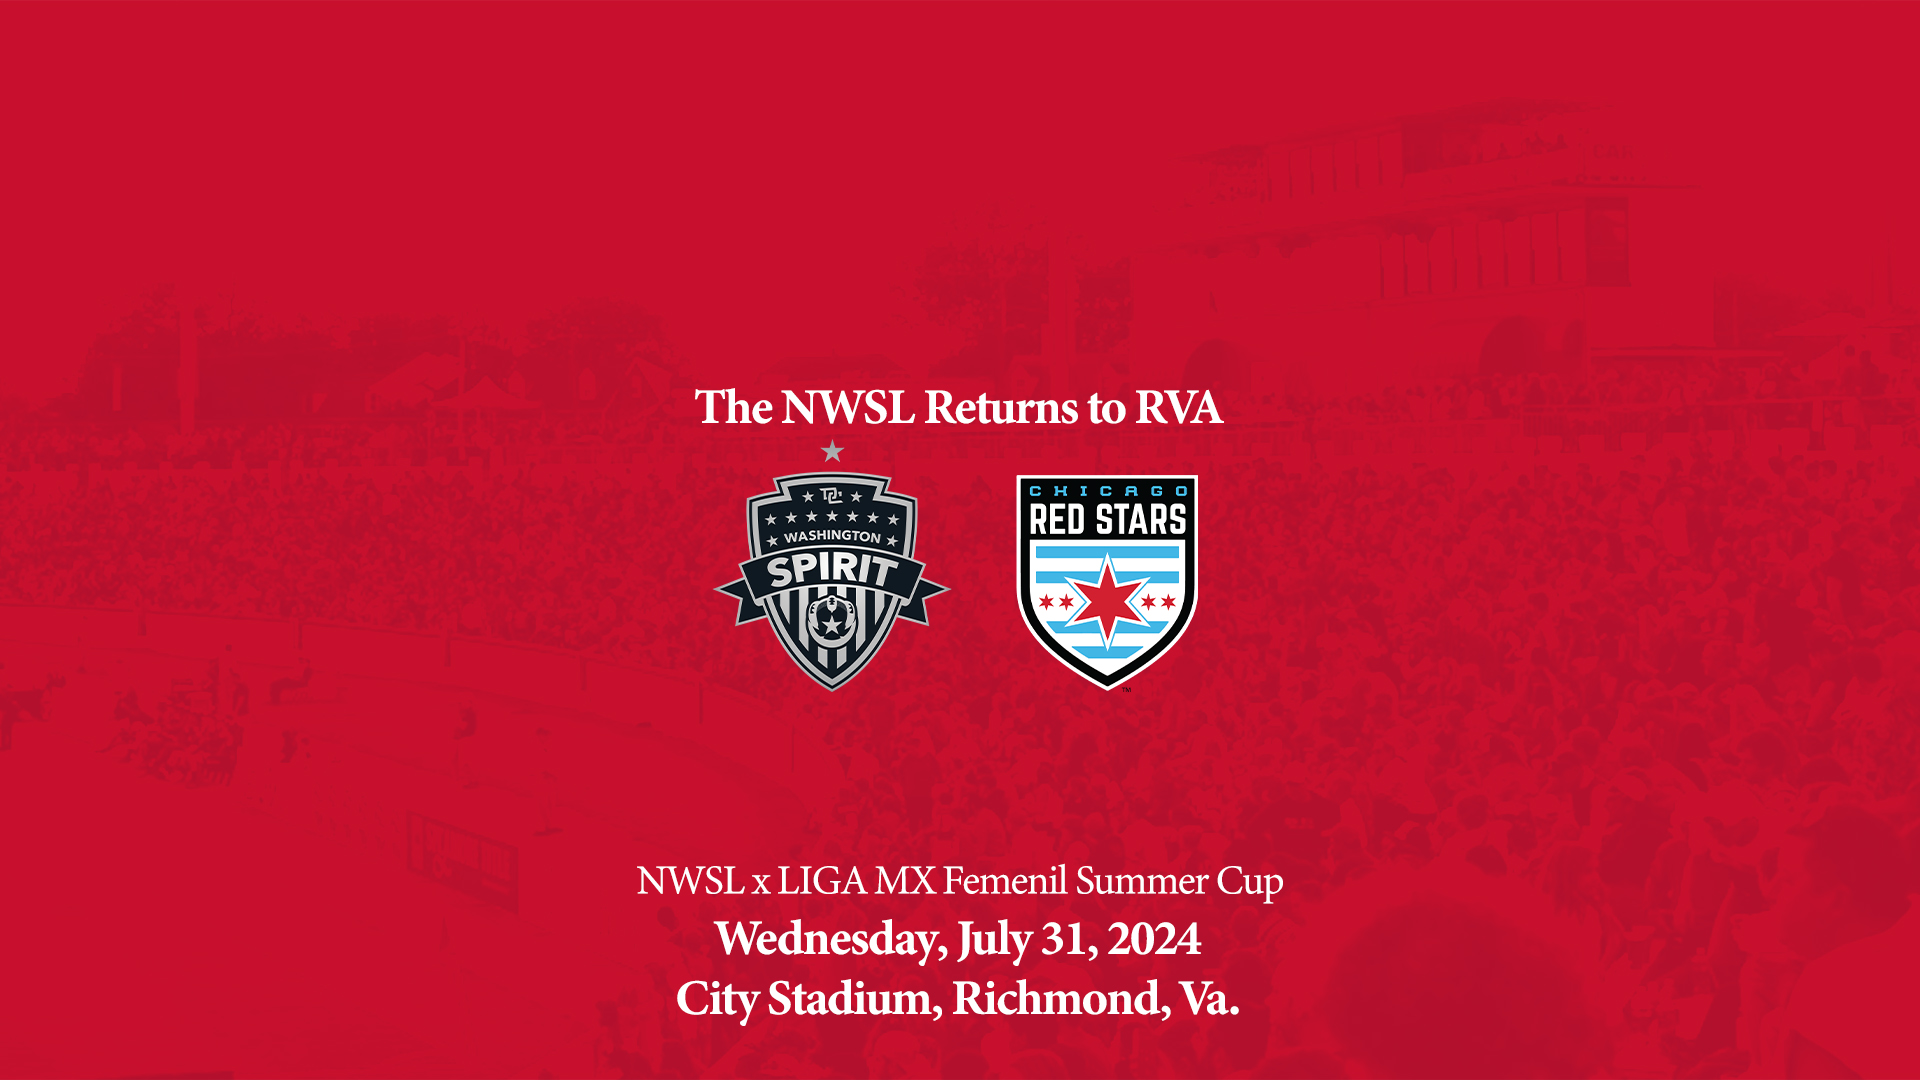 City Stadium to Host NWSL x LIGA MX Femenil Summer Cup Match Between Washington Spirit and Chicago Red Stars featured image